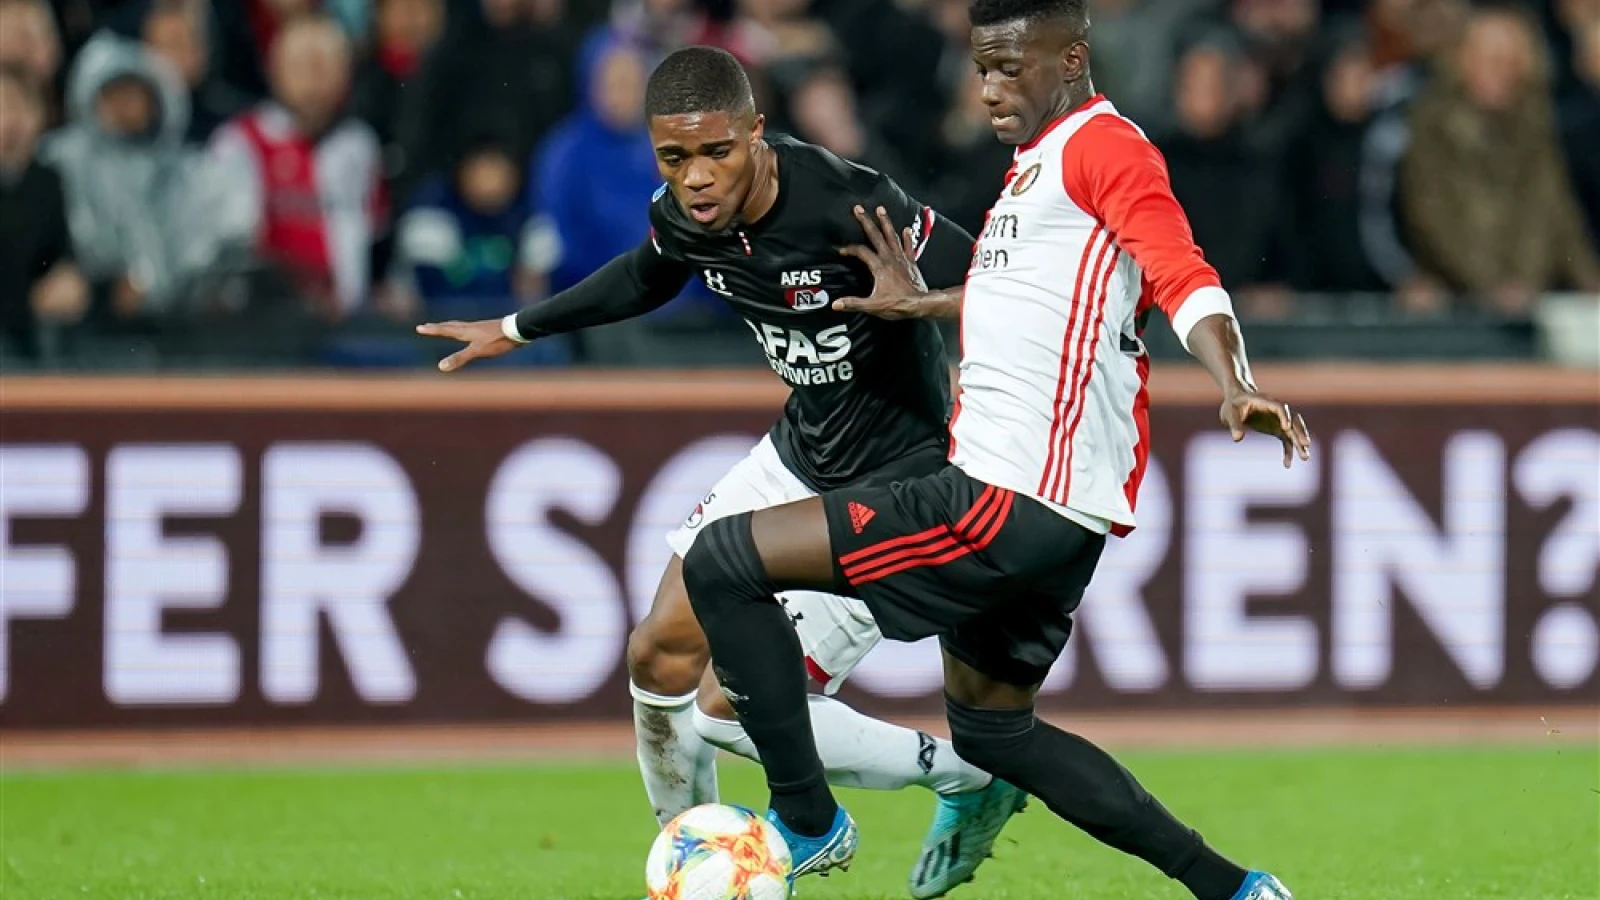 LIVE | Feyenoord - AZ 0-3 | Einde wedstrijd